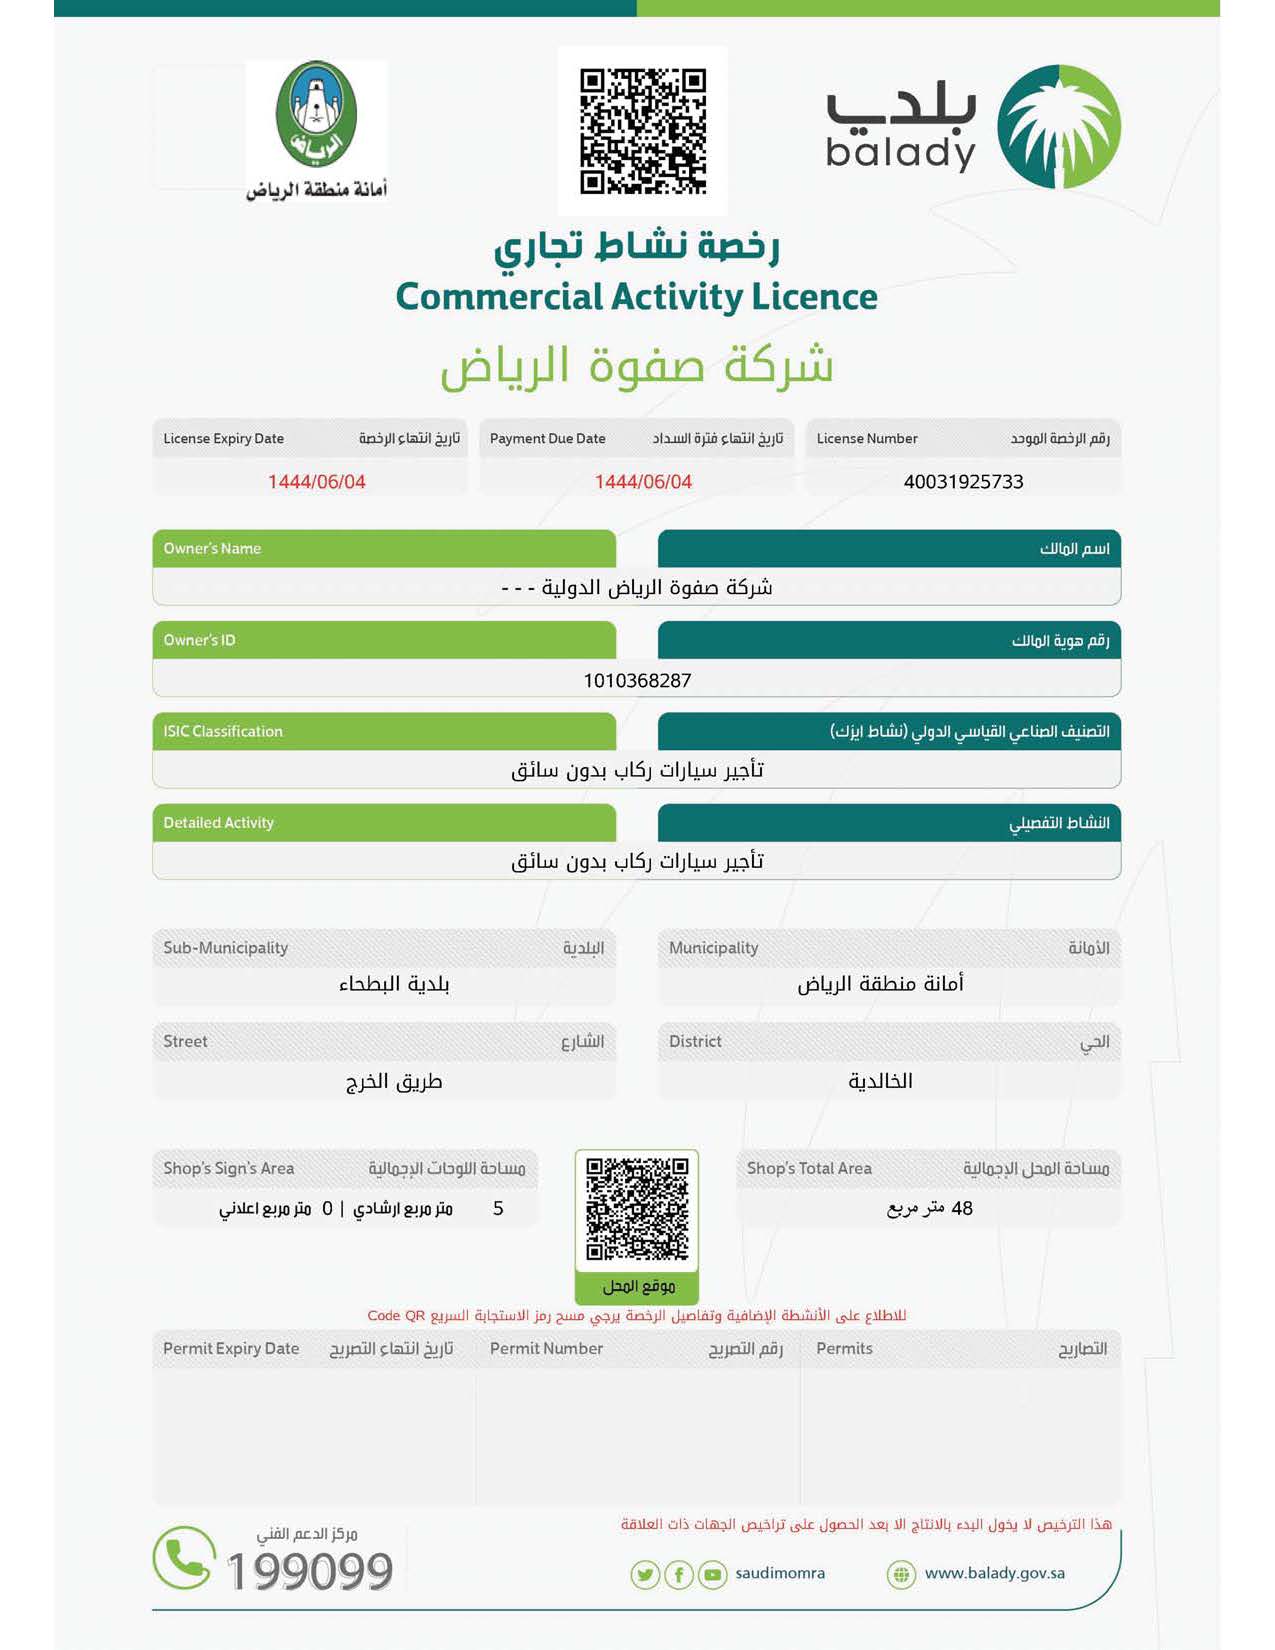 البلديات Page 03 One of the leading companies and a significant number in all its fields